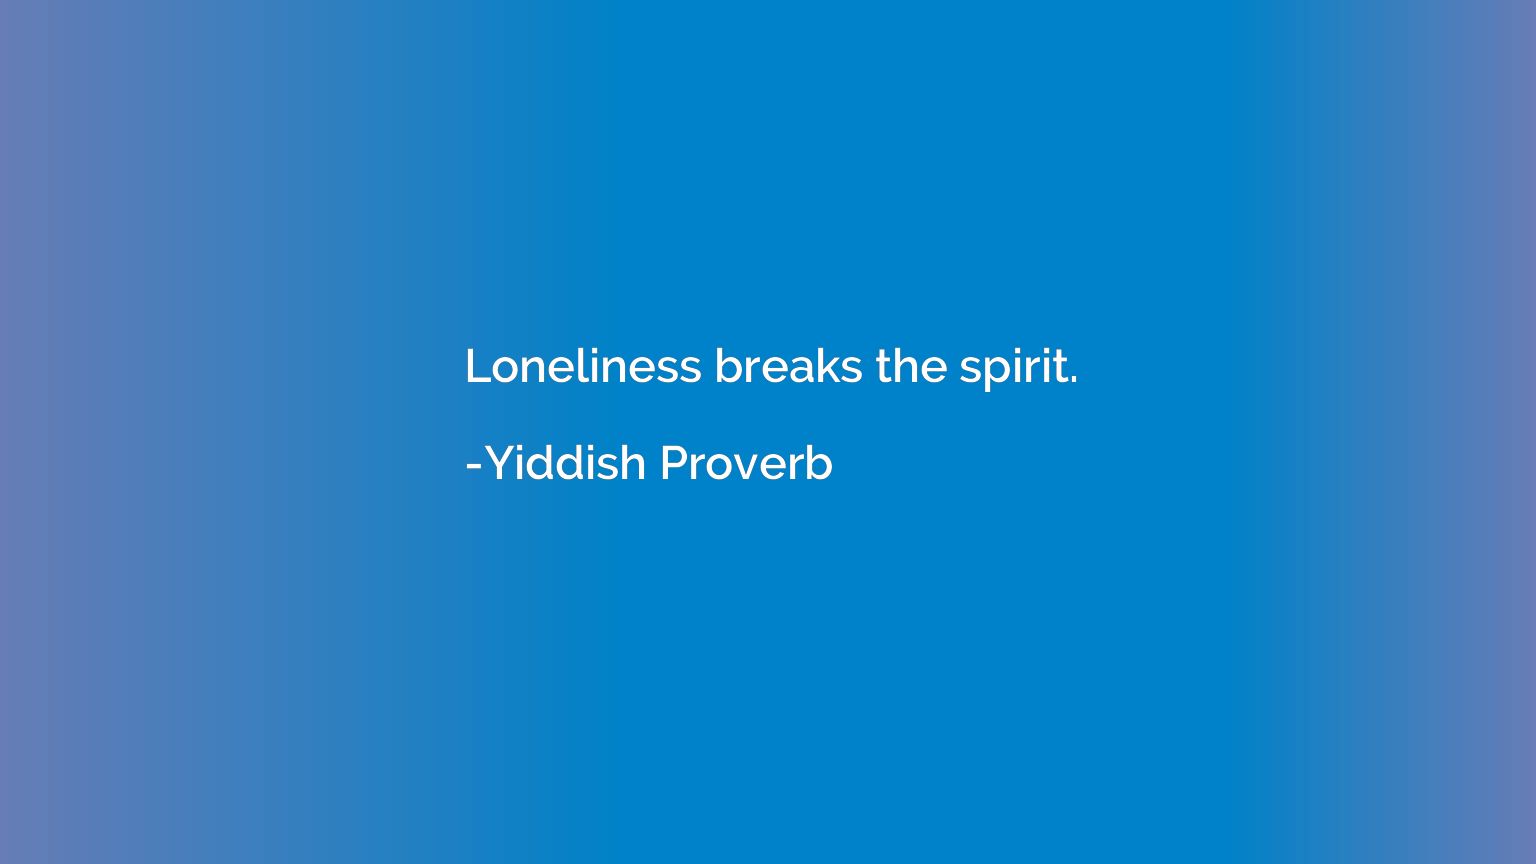 Loneliness breaks the spirit.